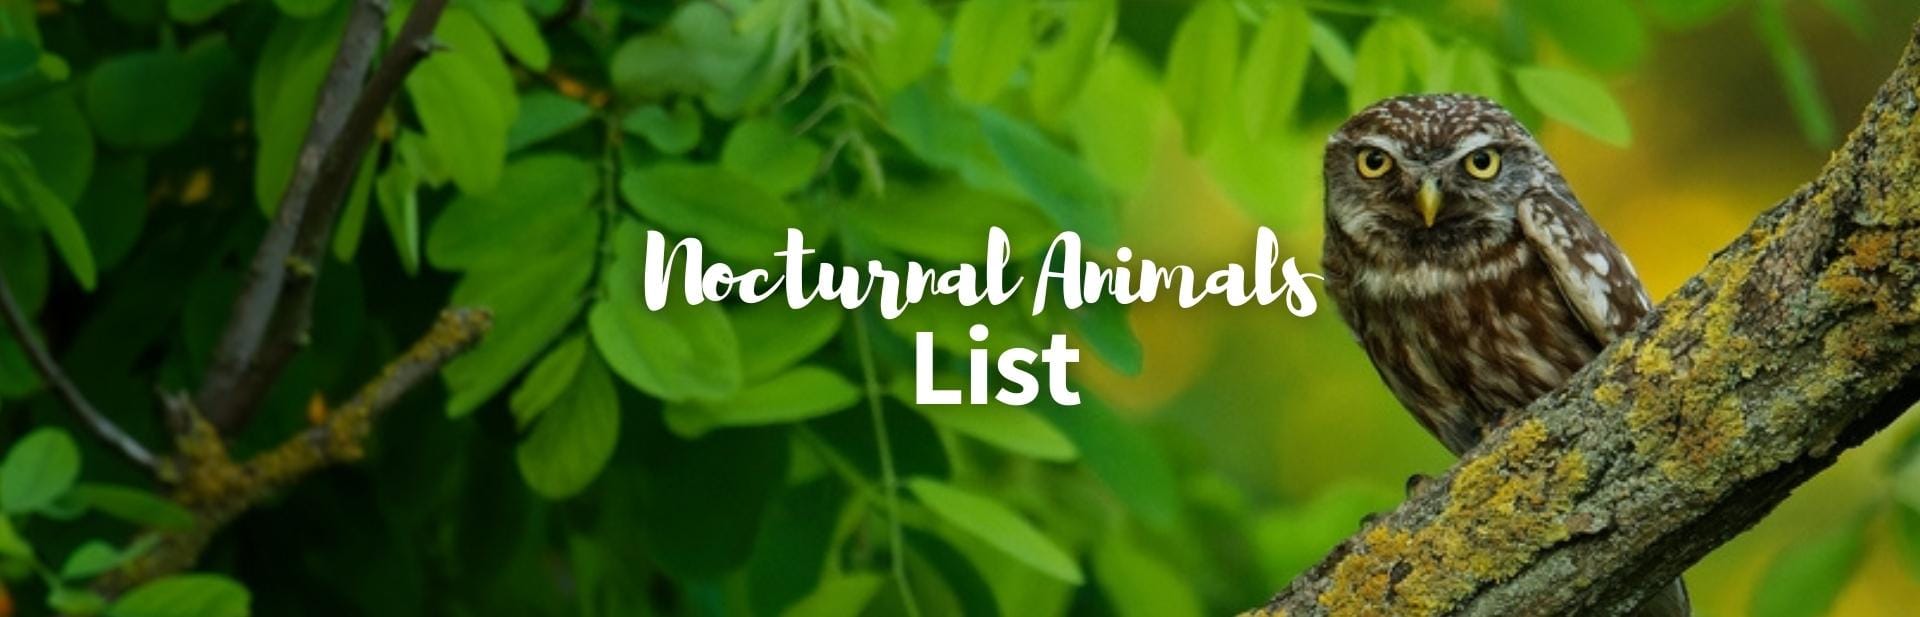 Nocturnal Animals List: What Stays Awake At Night?